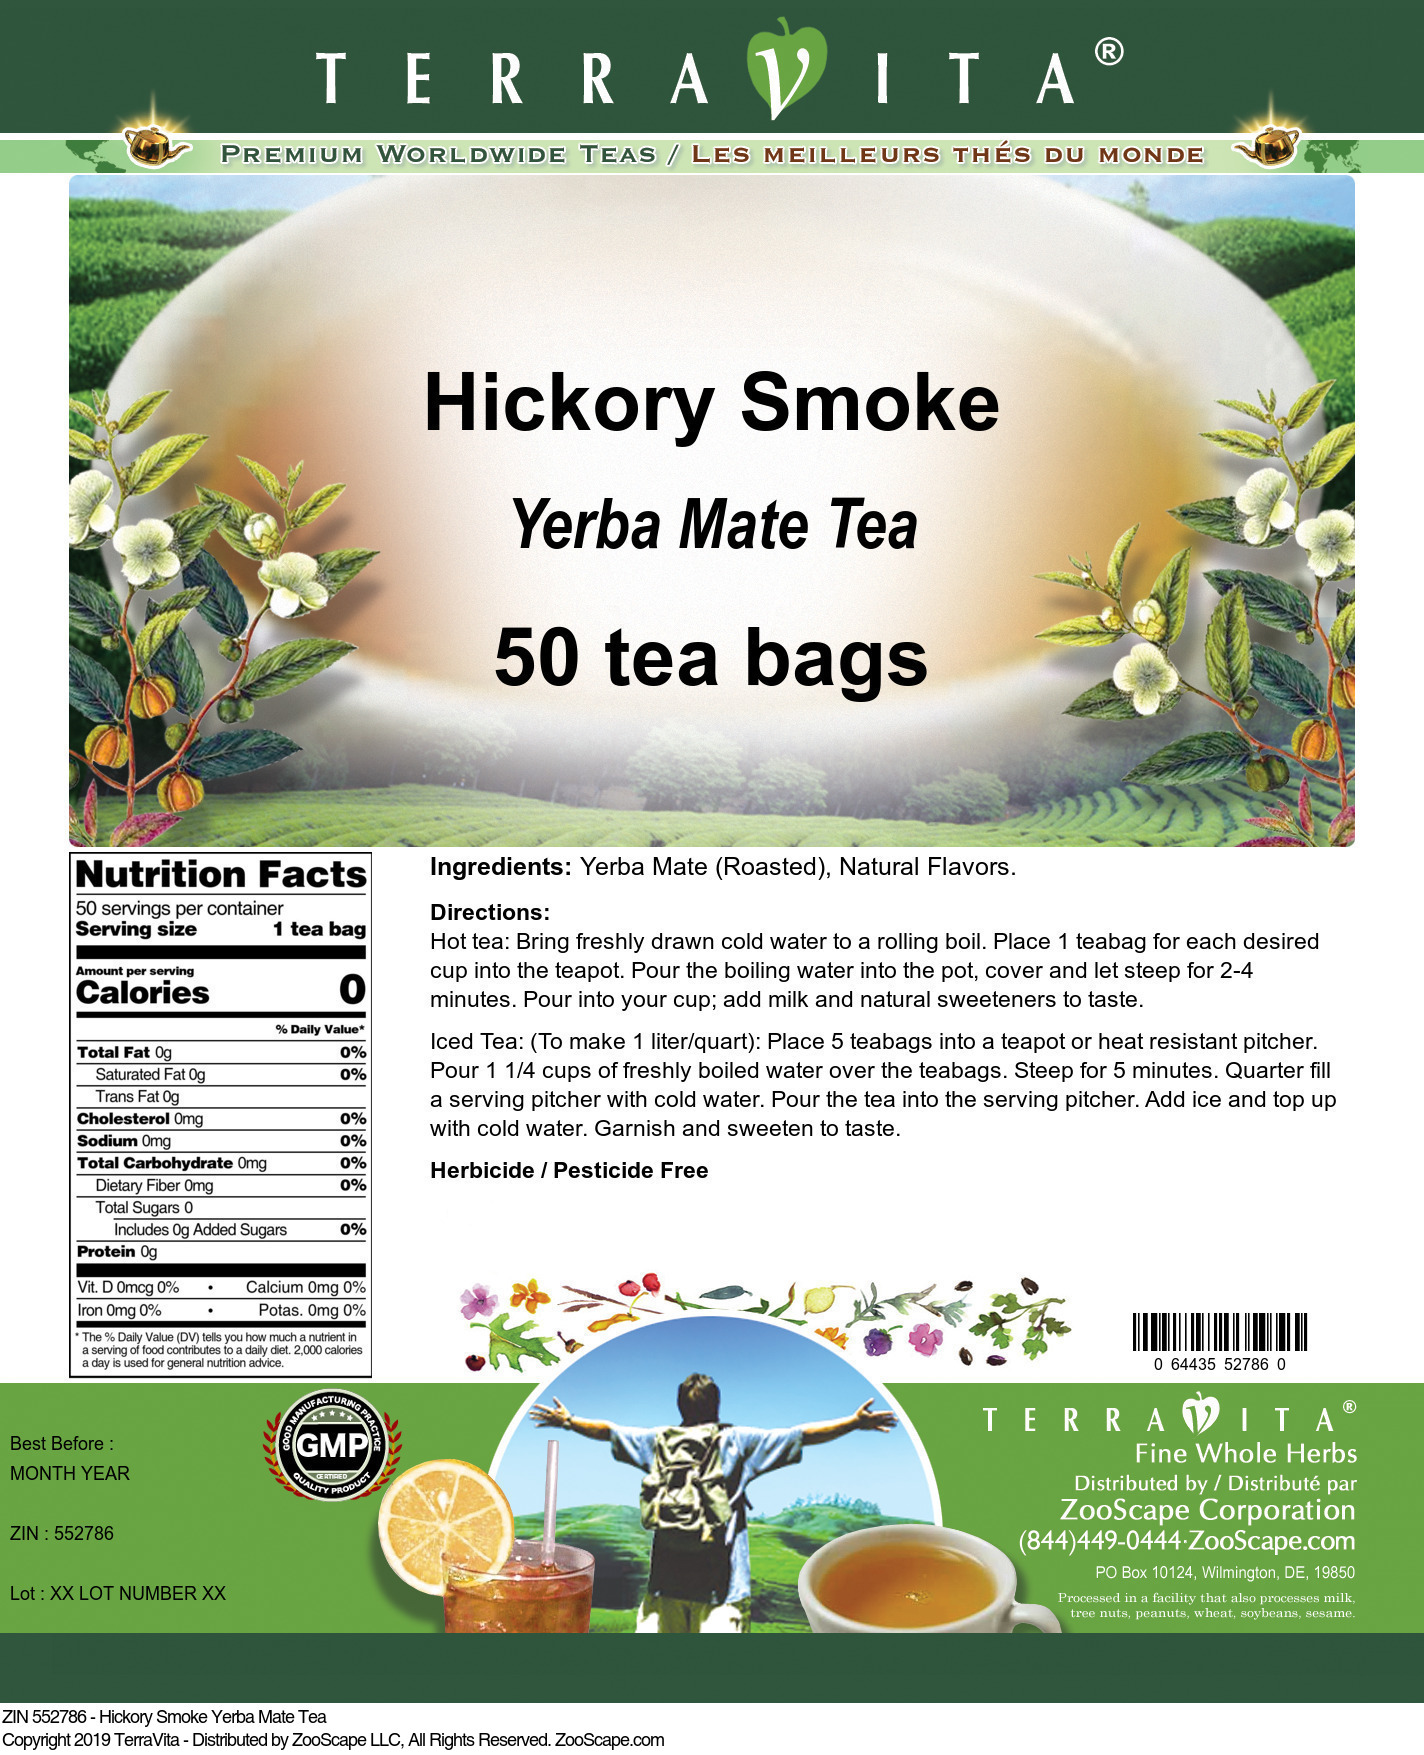 Hickory Smoke Yerba Mate Tea - Label